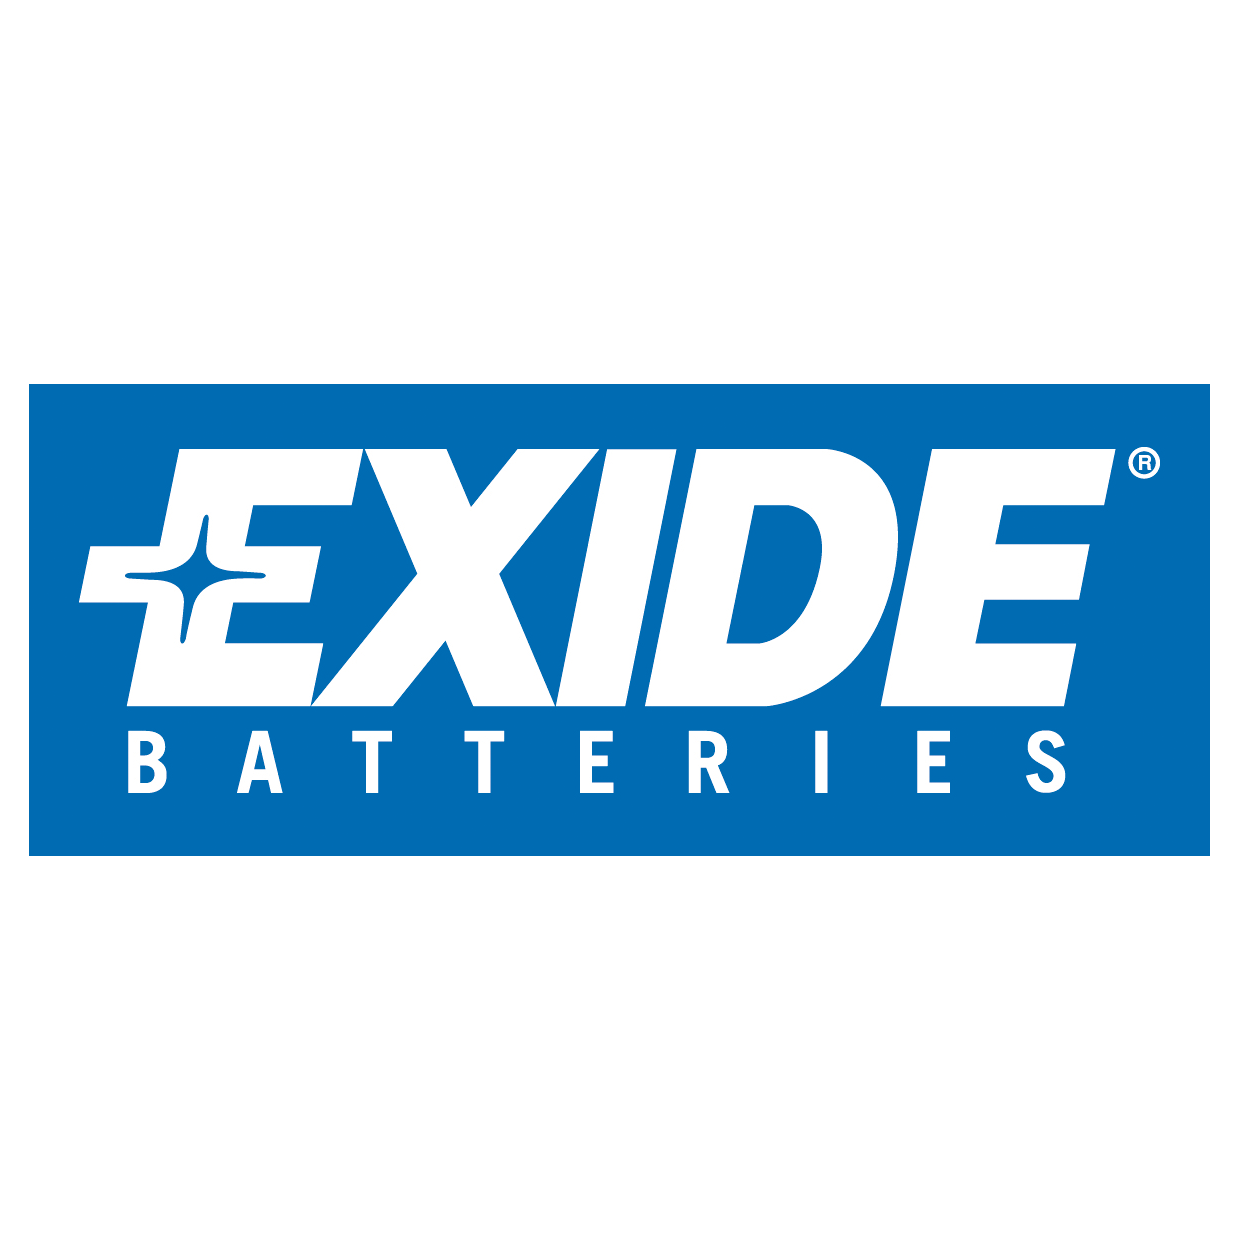 exide batteries